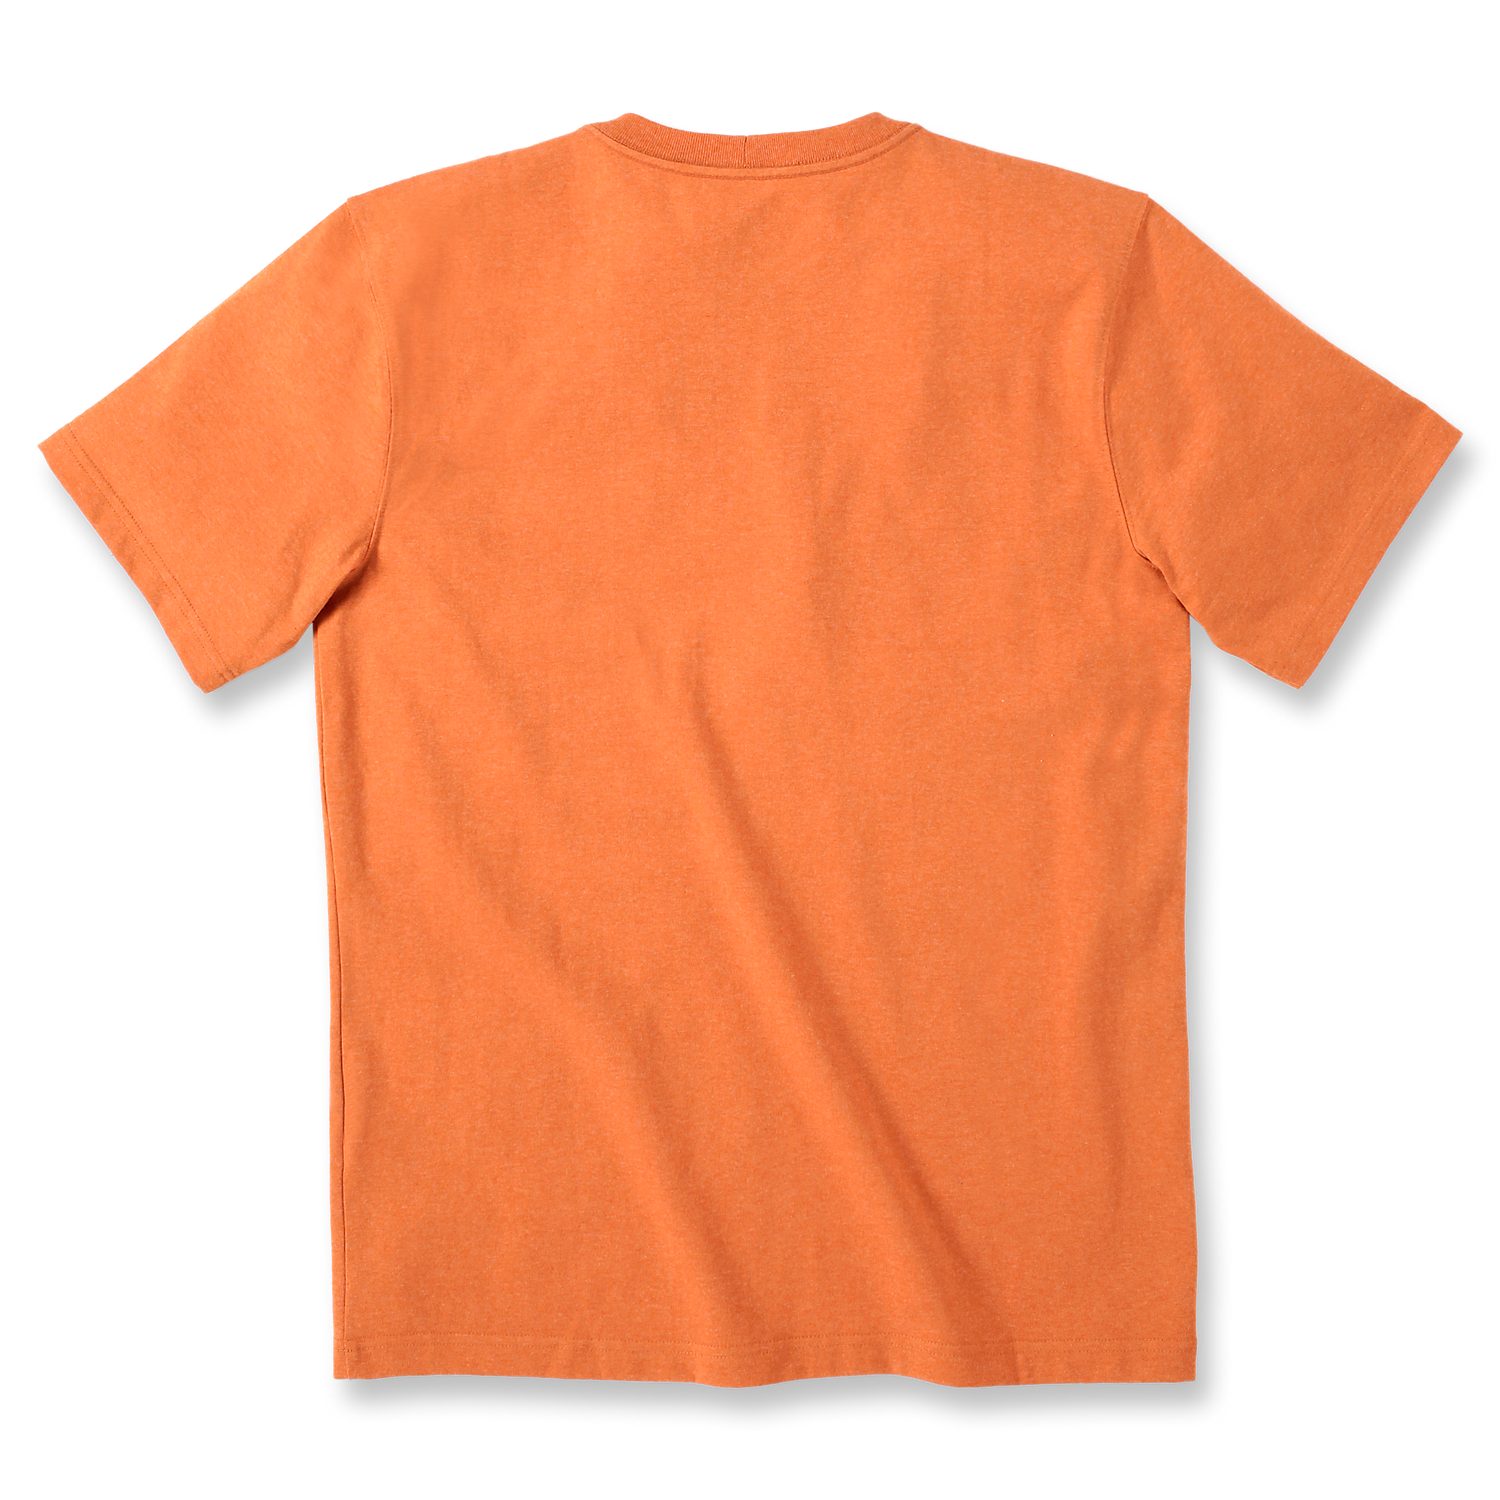 Carhartt Print-Shirt Core Logo Marmalade Carhartt